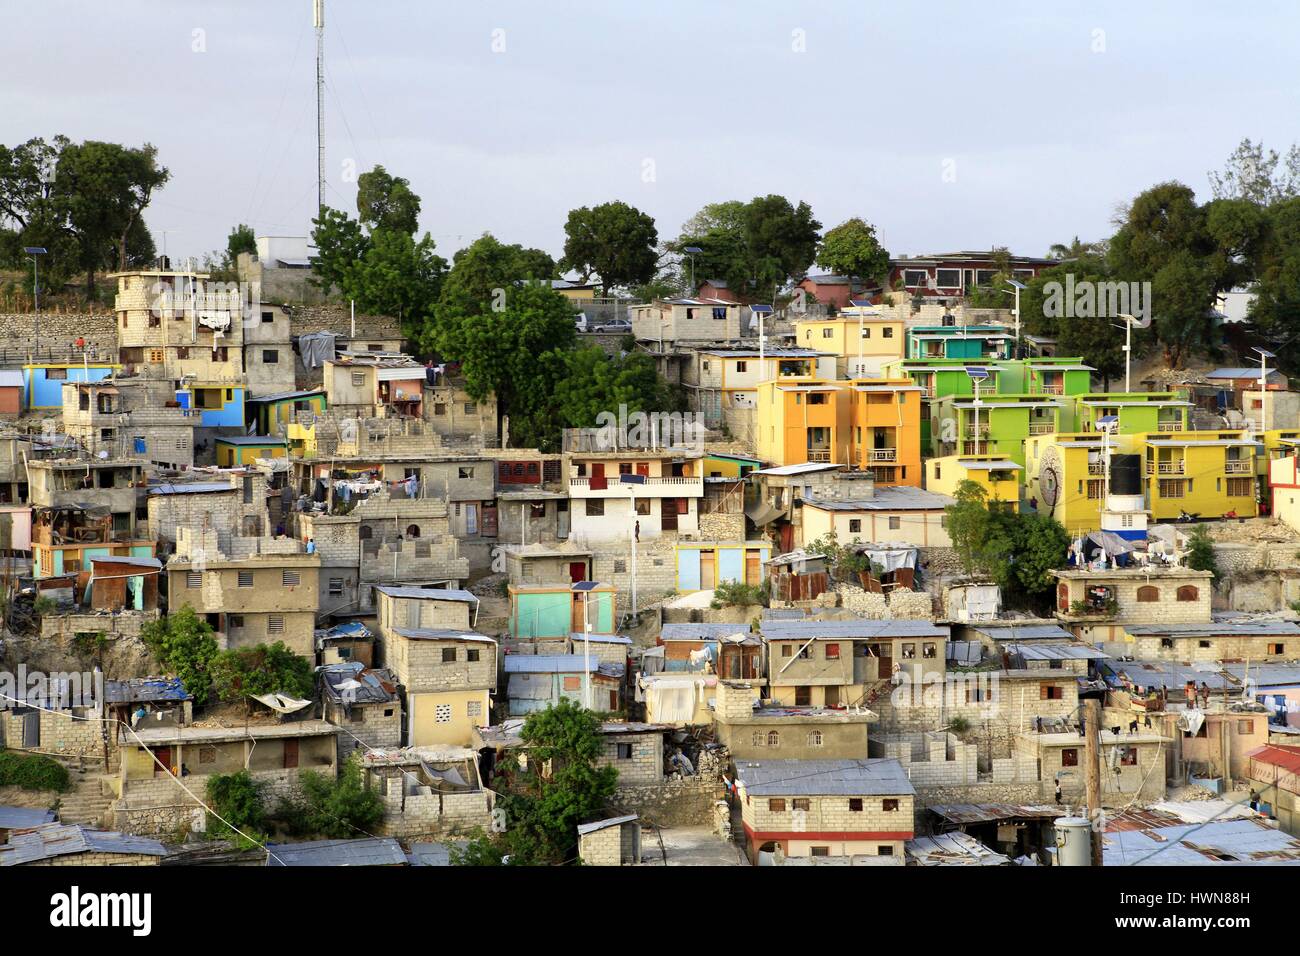 Haiti, Port au Prince, Morne Hercule, shantytown Stock Photo